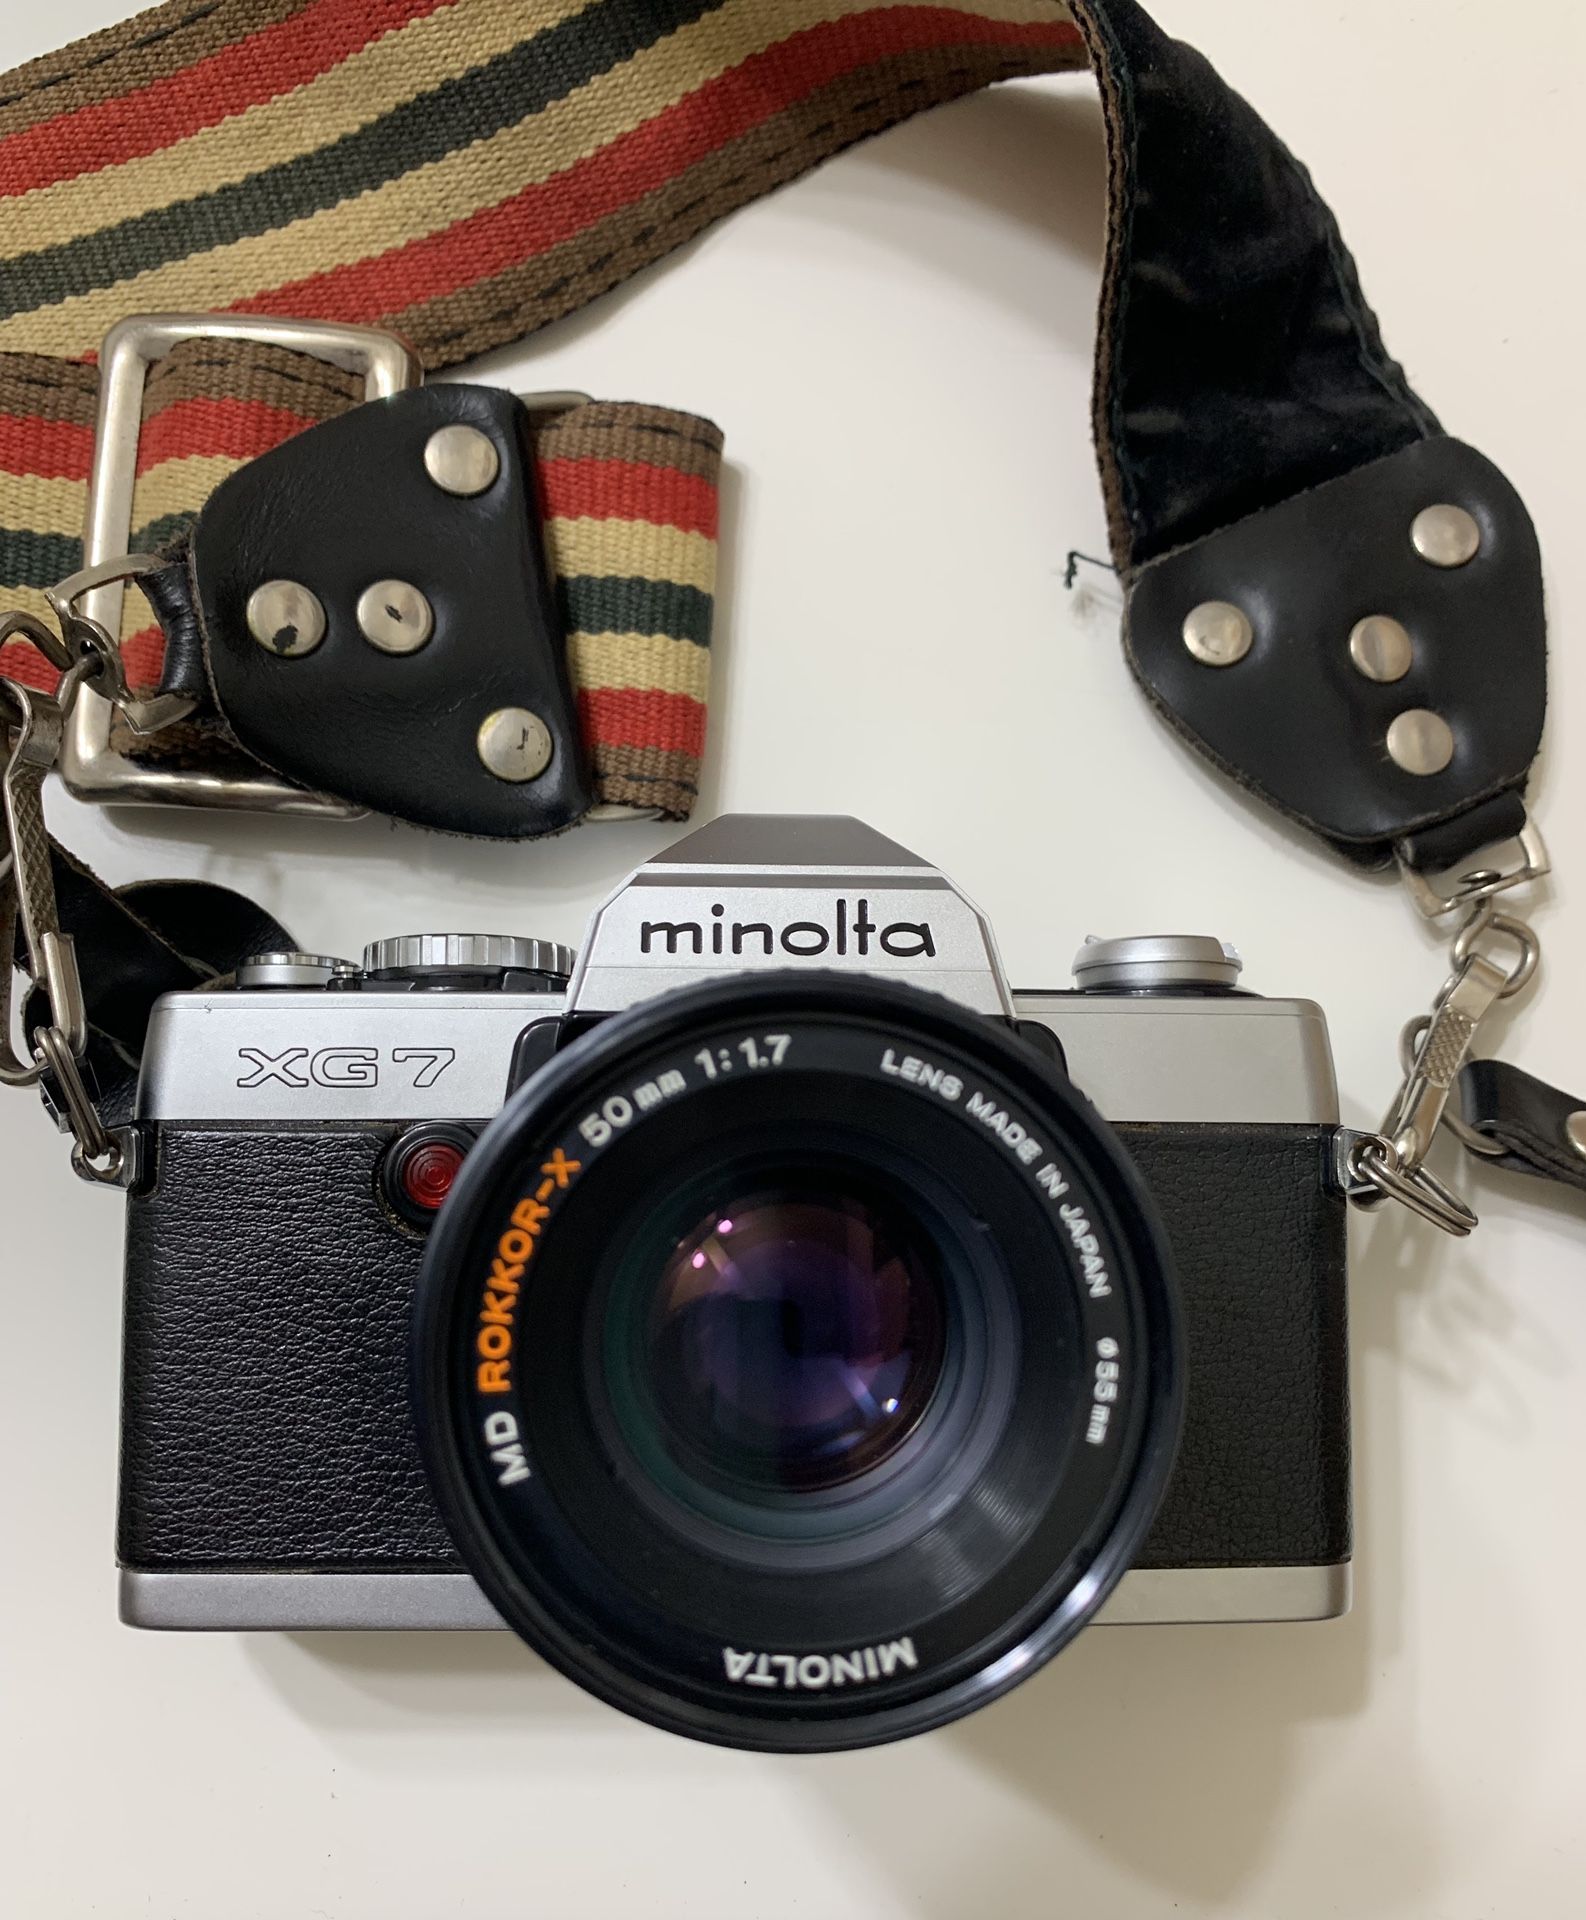 Minolta XG-7 35mm film camera with strap